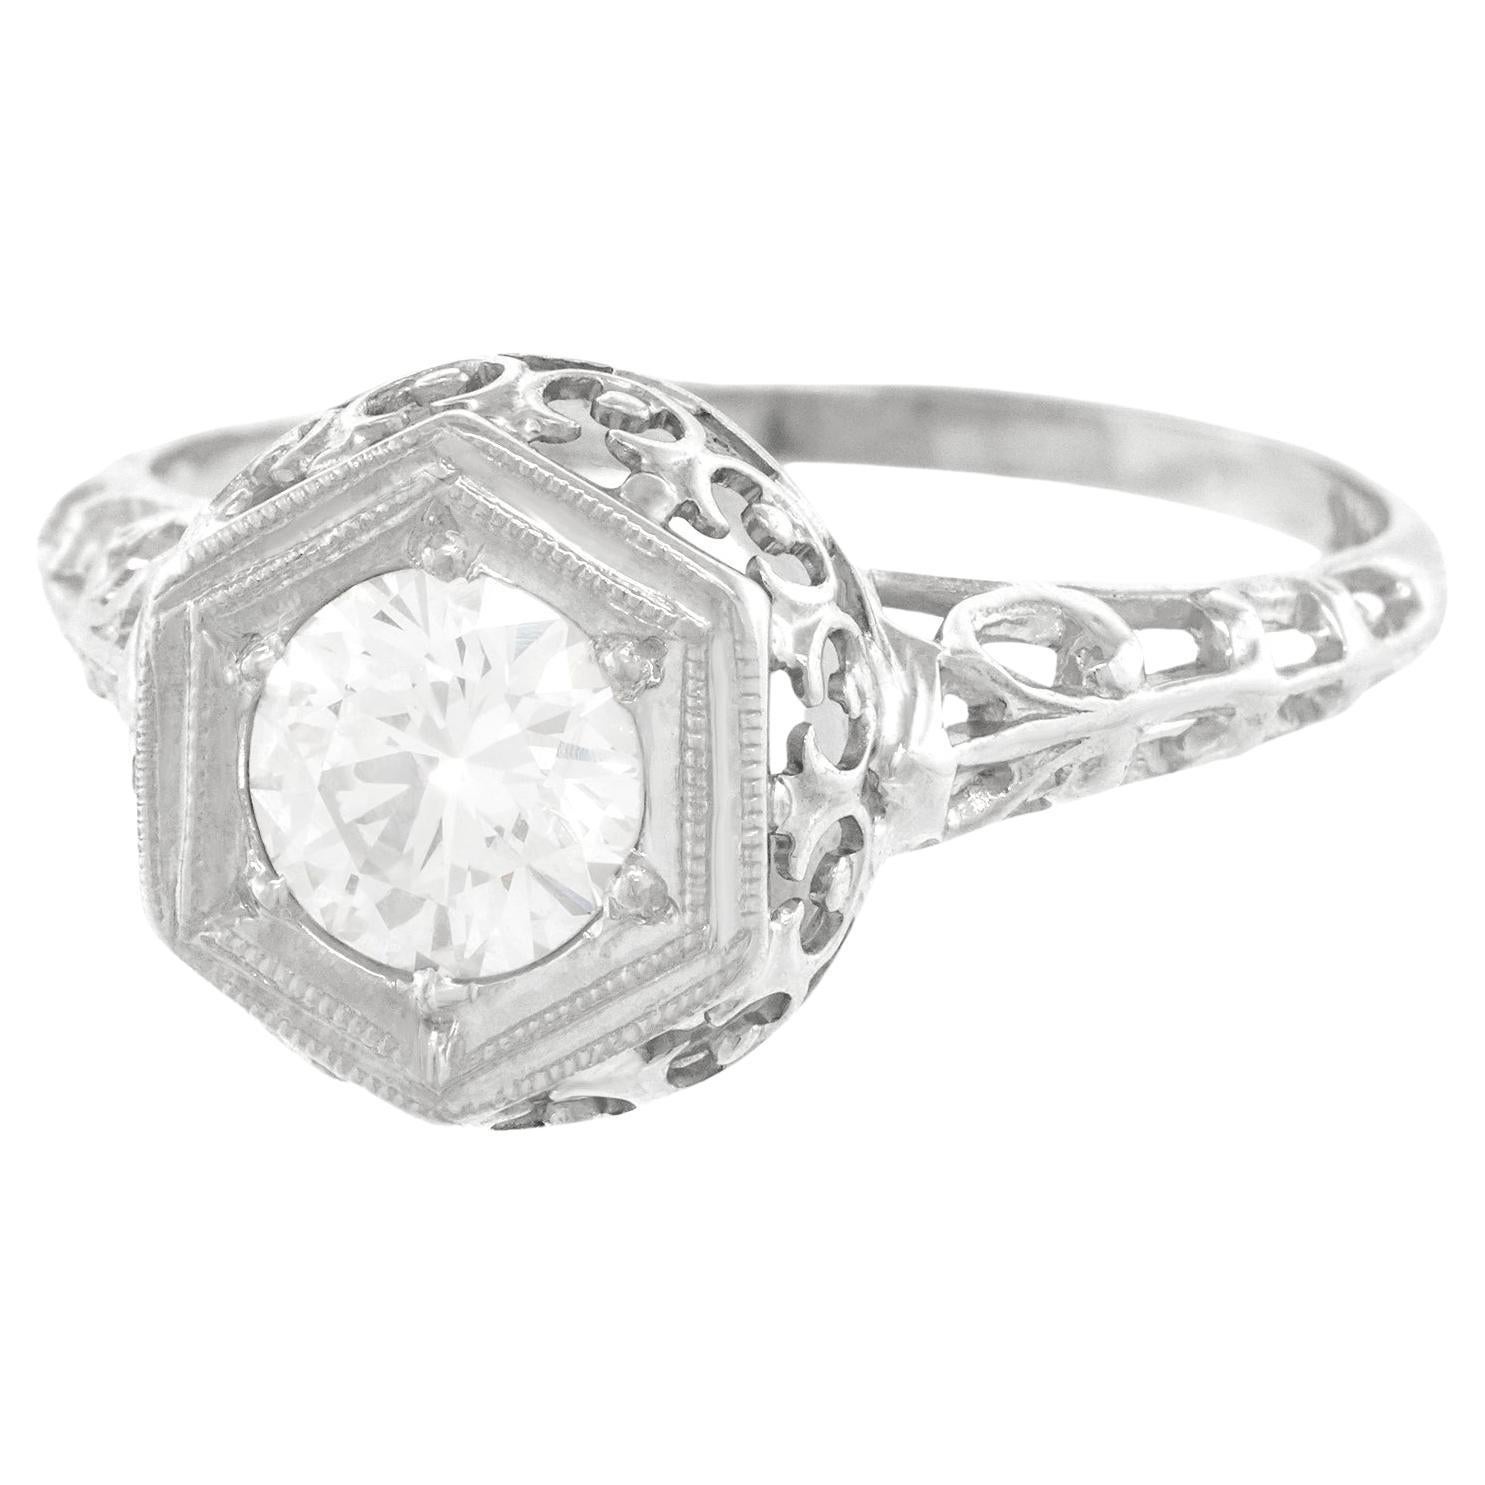 Art Deco Diamond Engagement Ring GIA